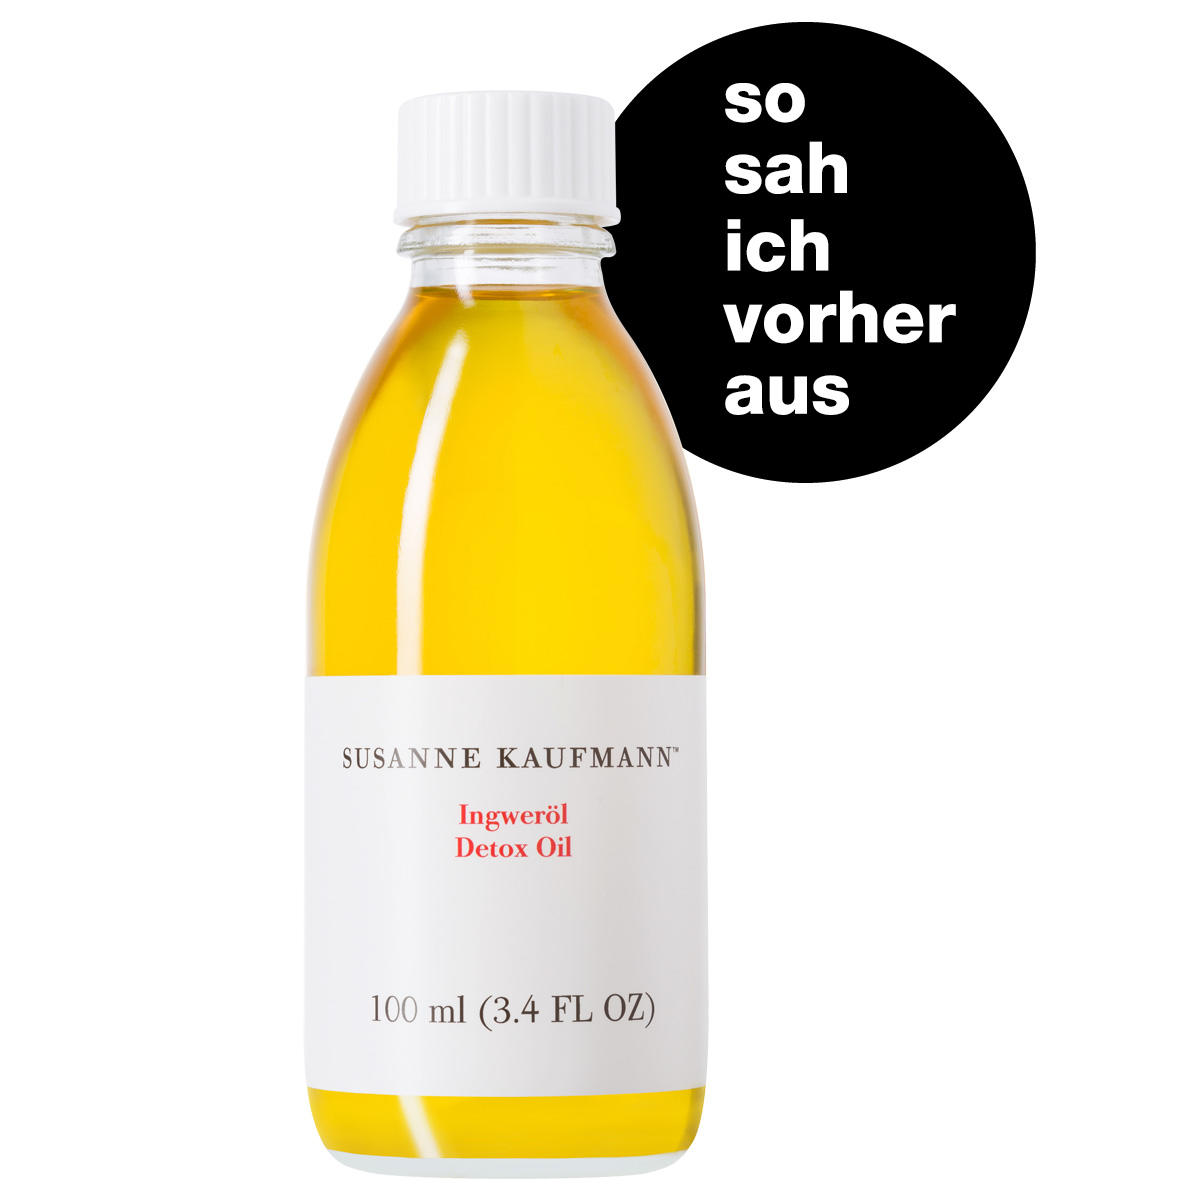 Susanne Kaufmann Ginger oil 100 ml - 5